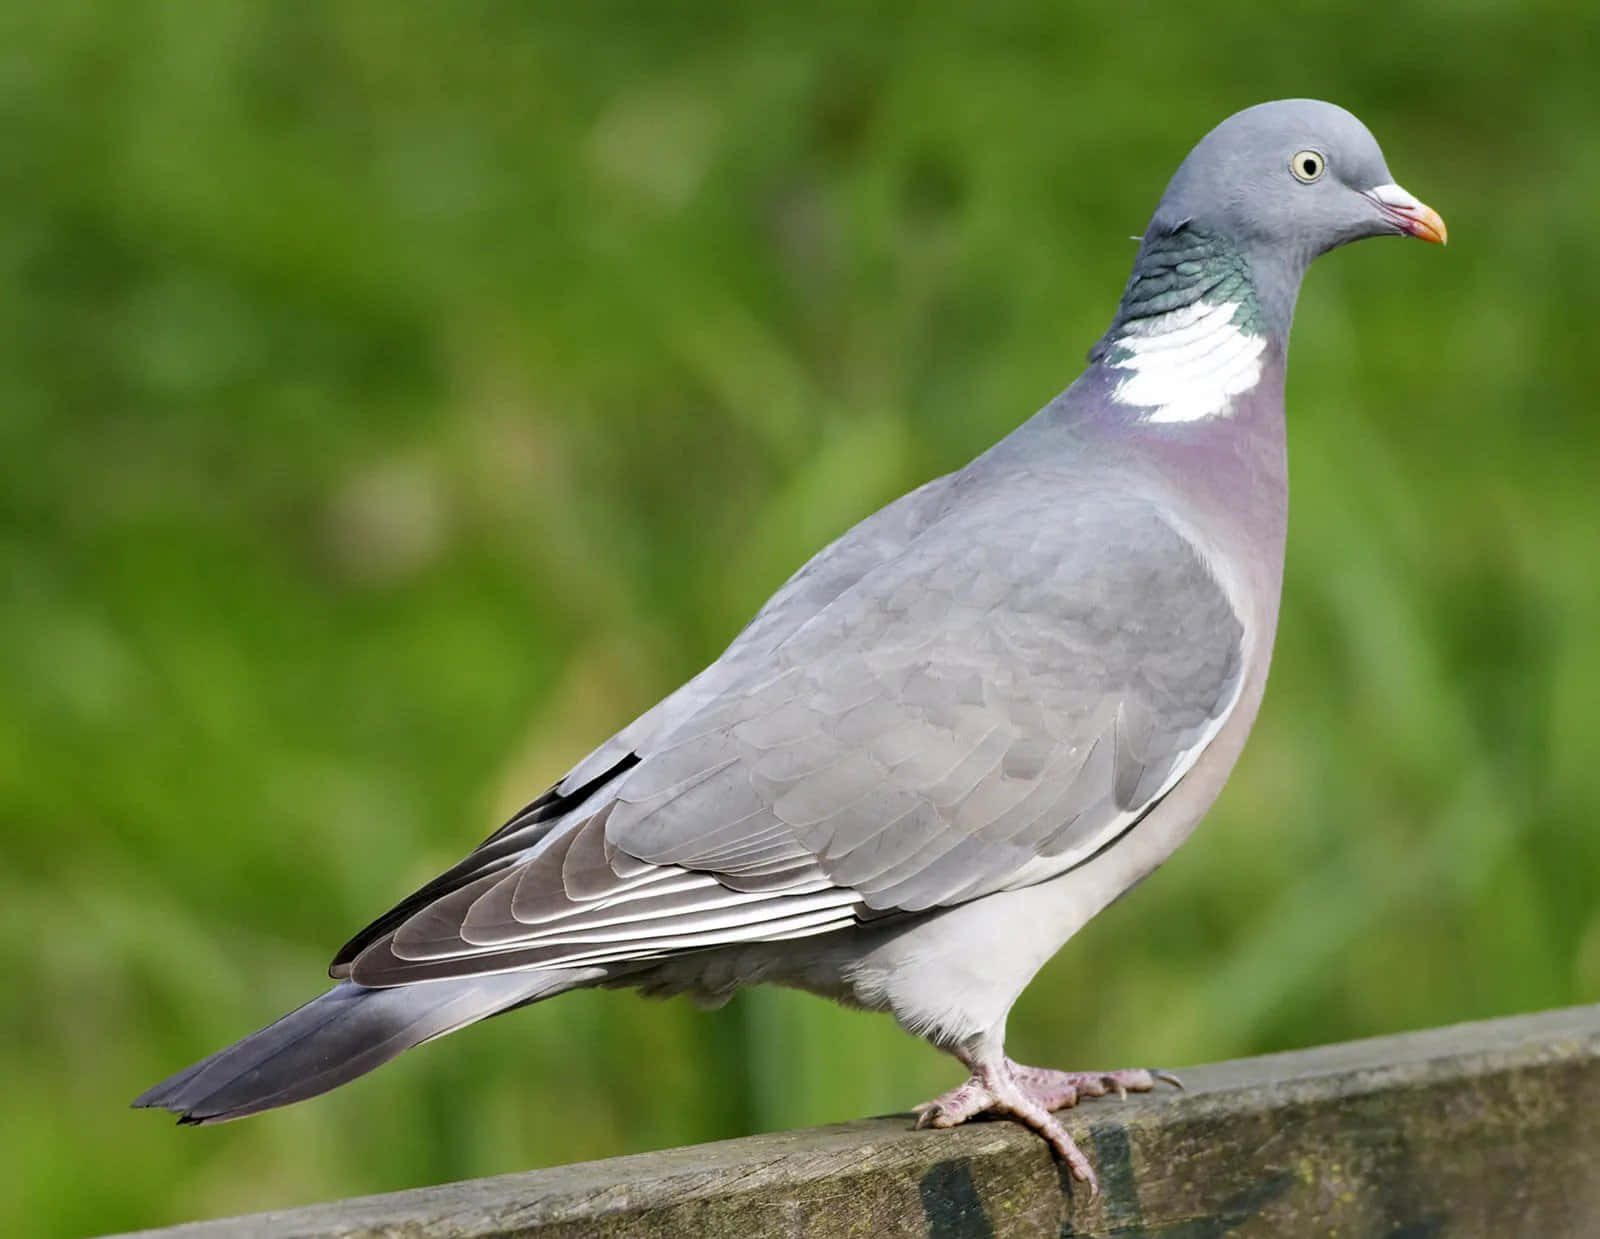 The Brilliant Pigeon